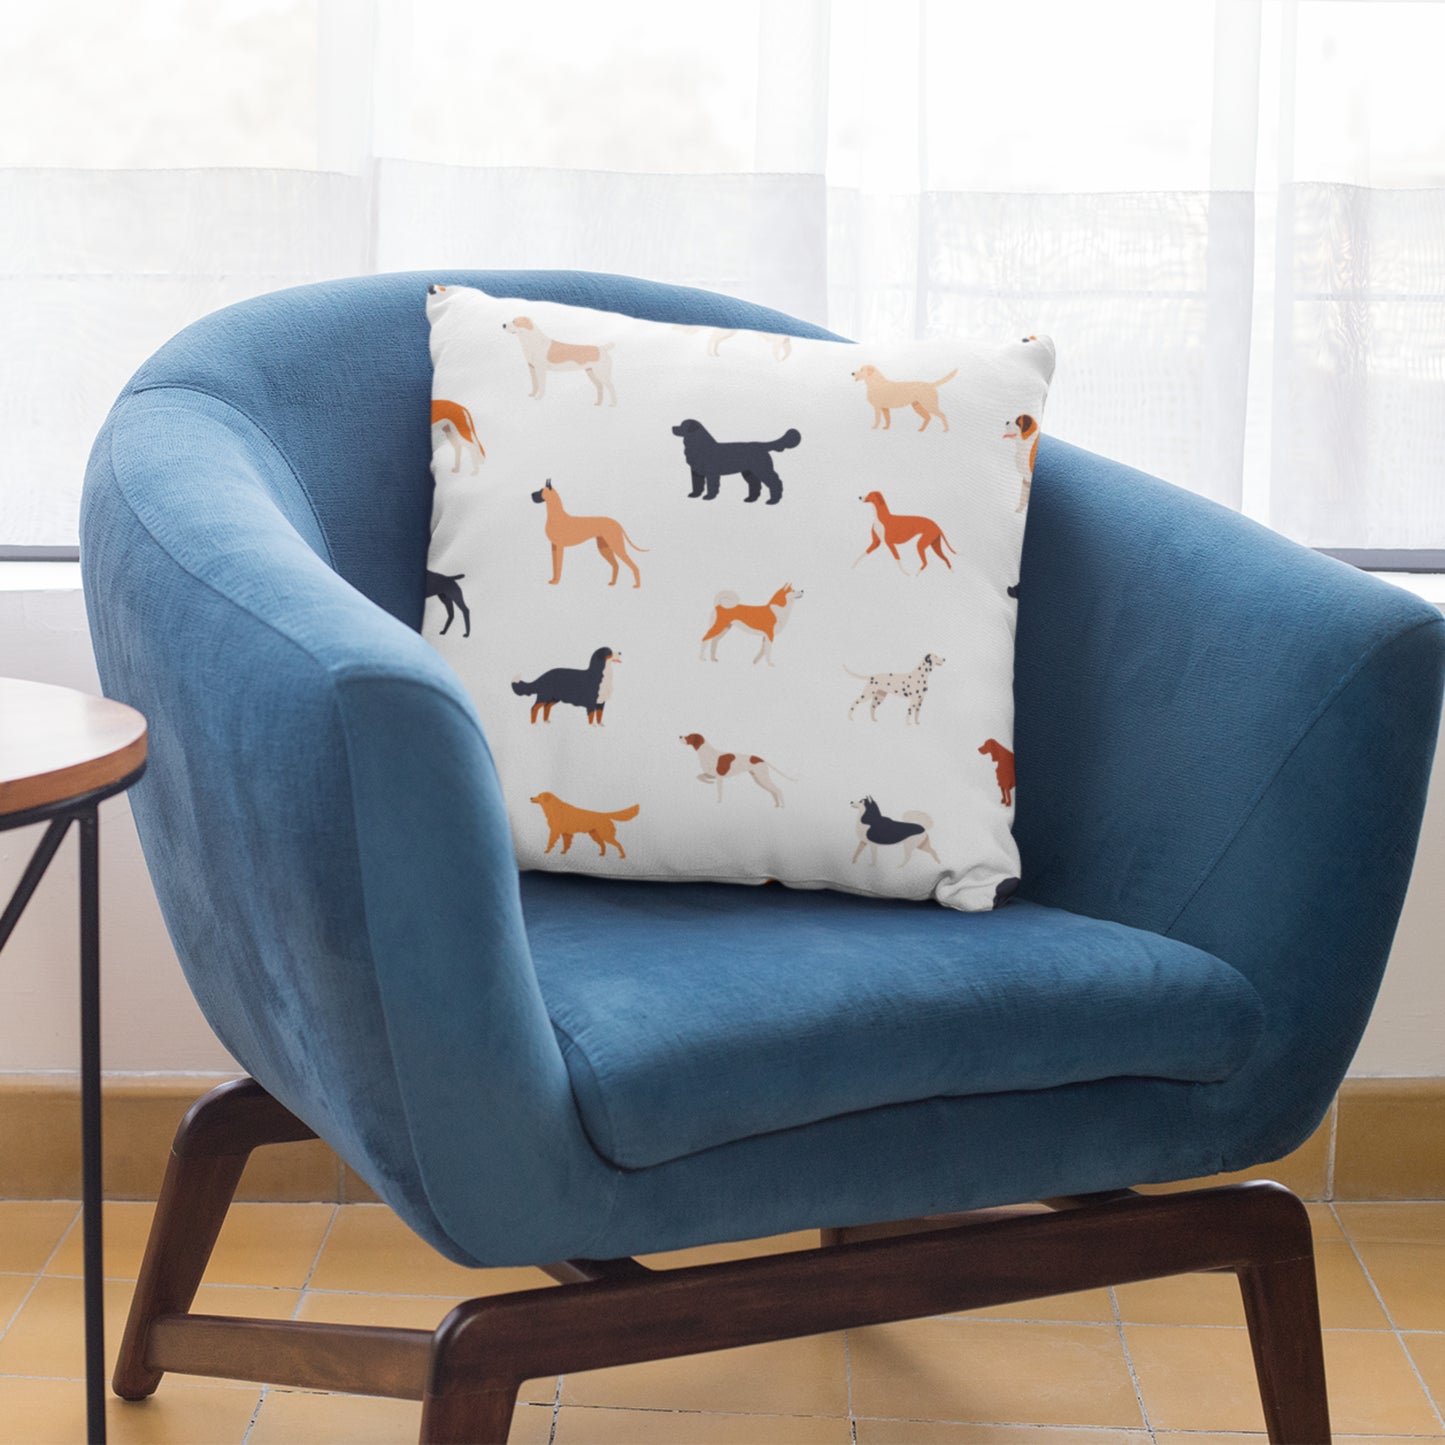 Homeezone's Dog Pattern Theme Pillow